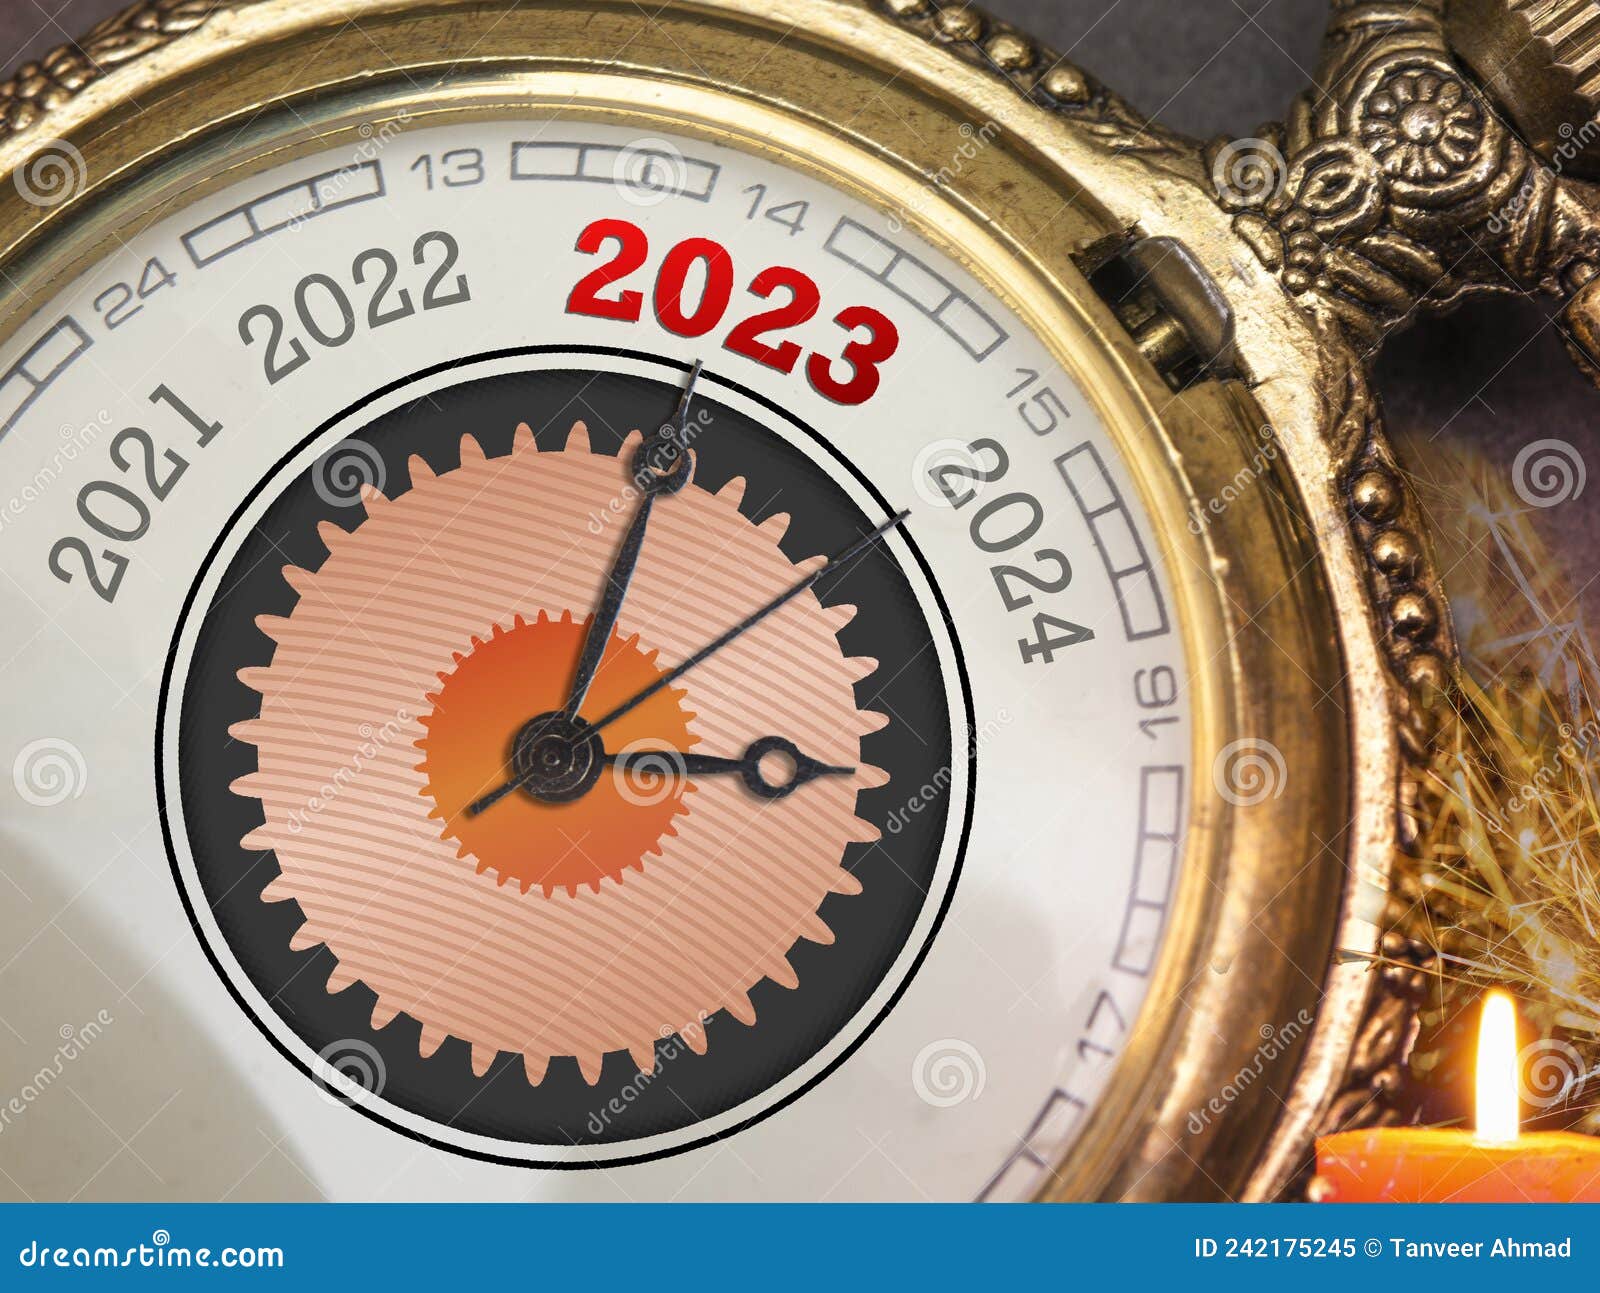 Happy New Year Displayed Vintage Clock 242175245 